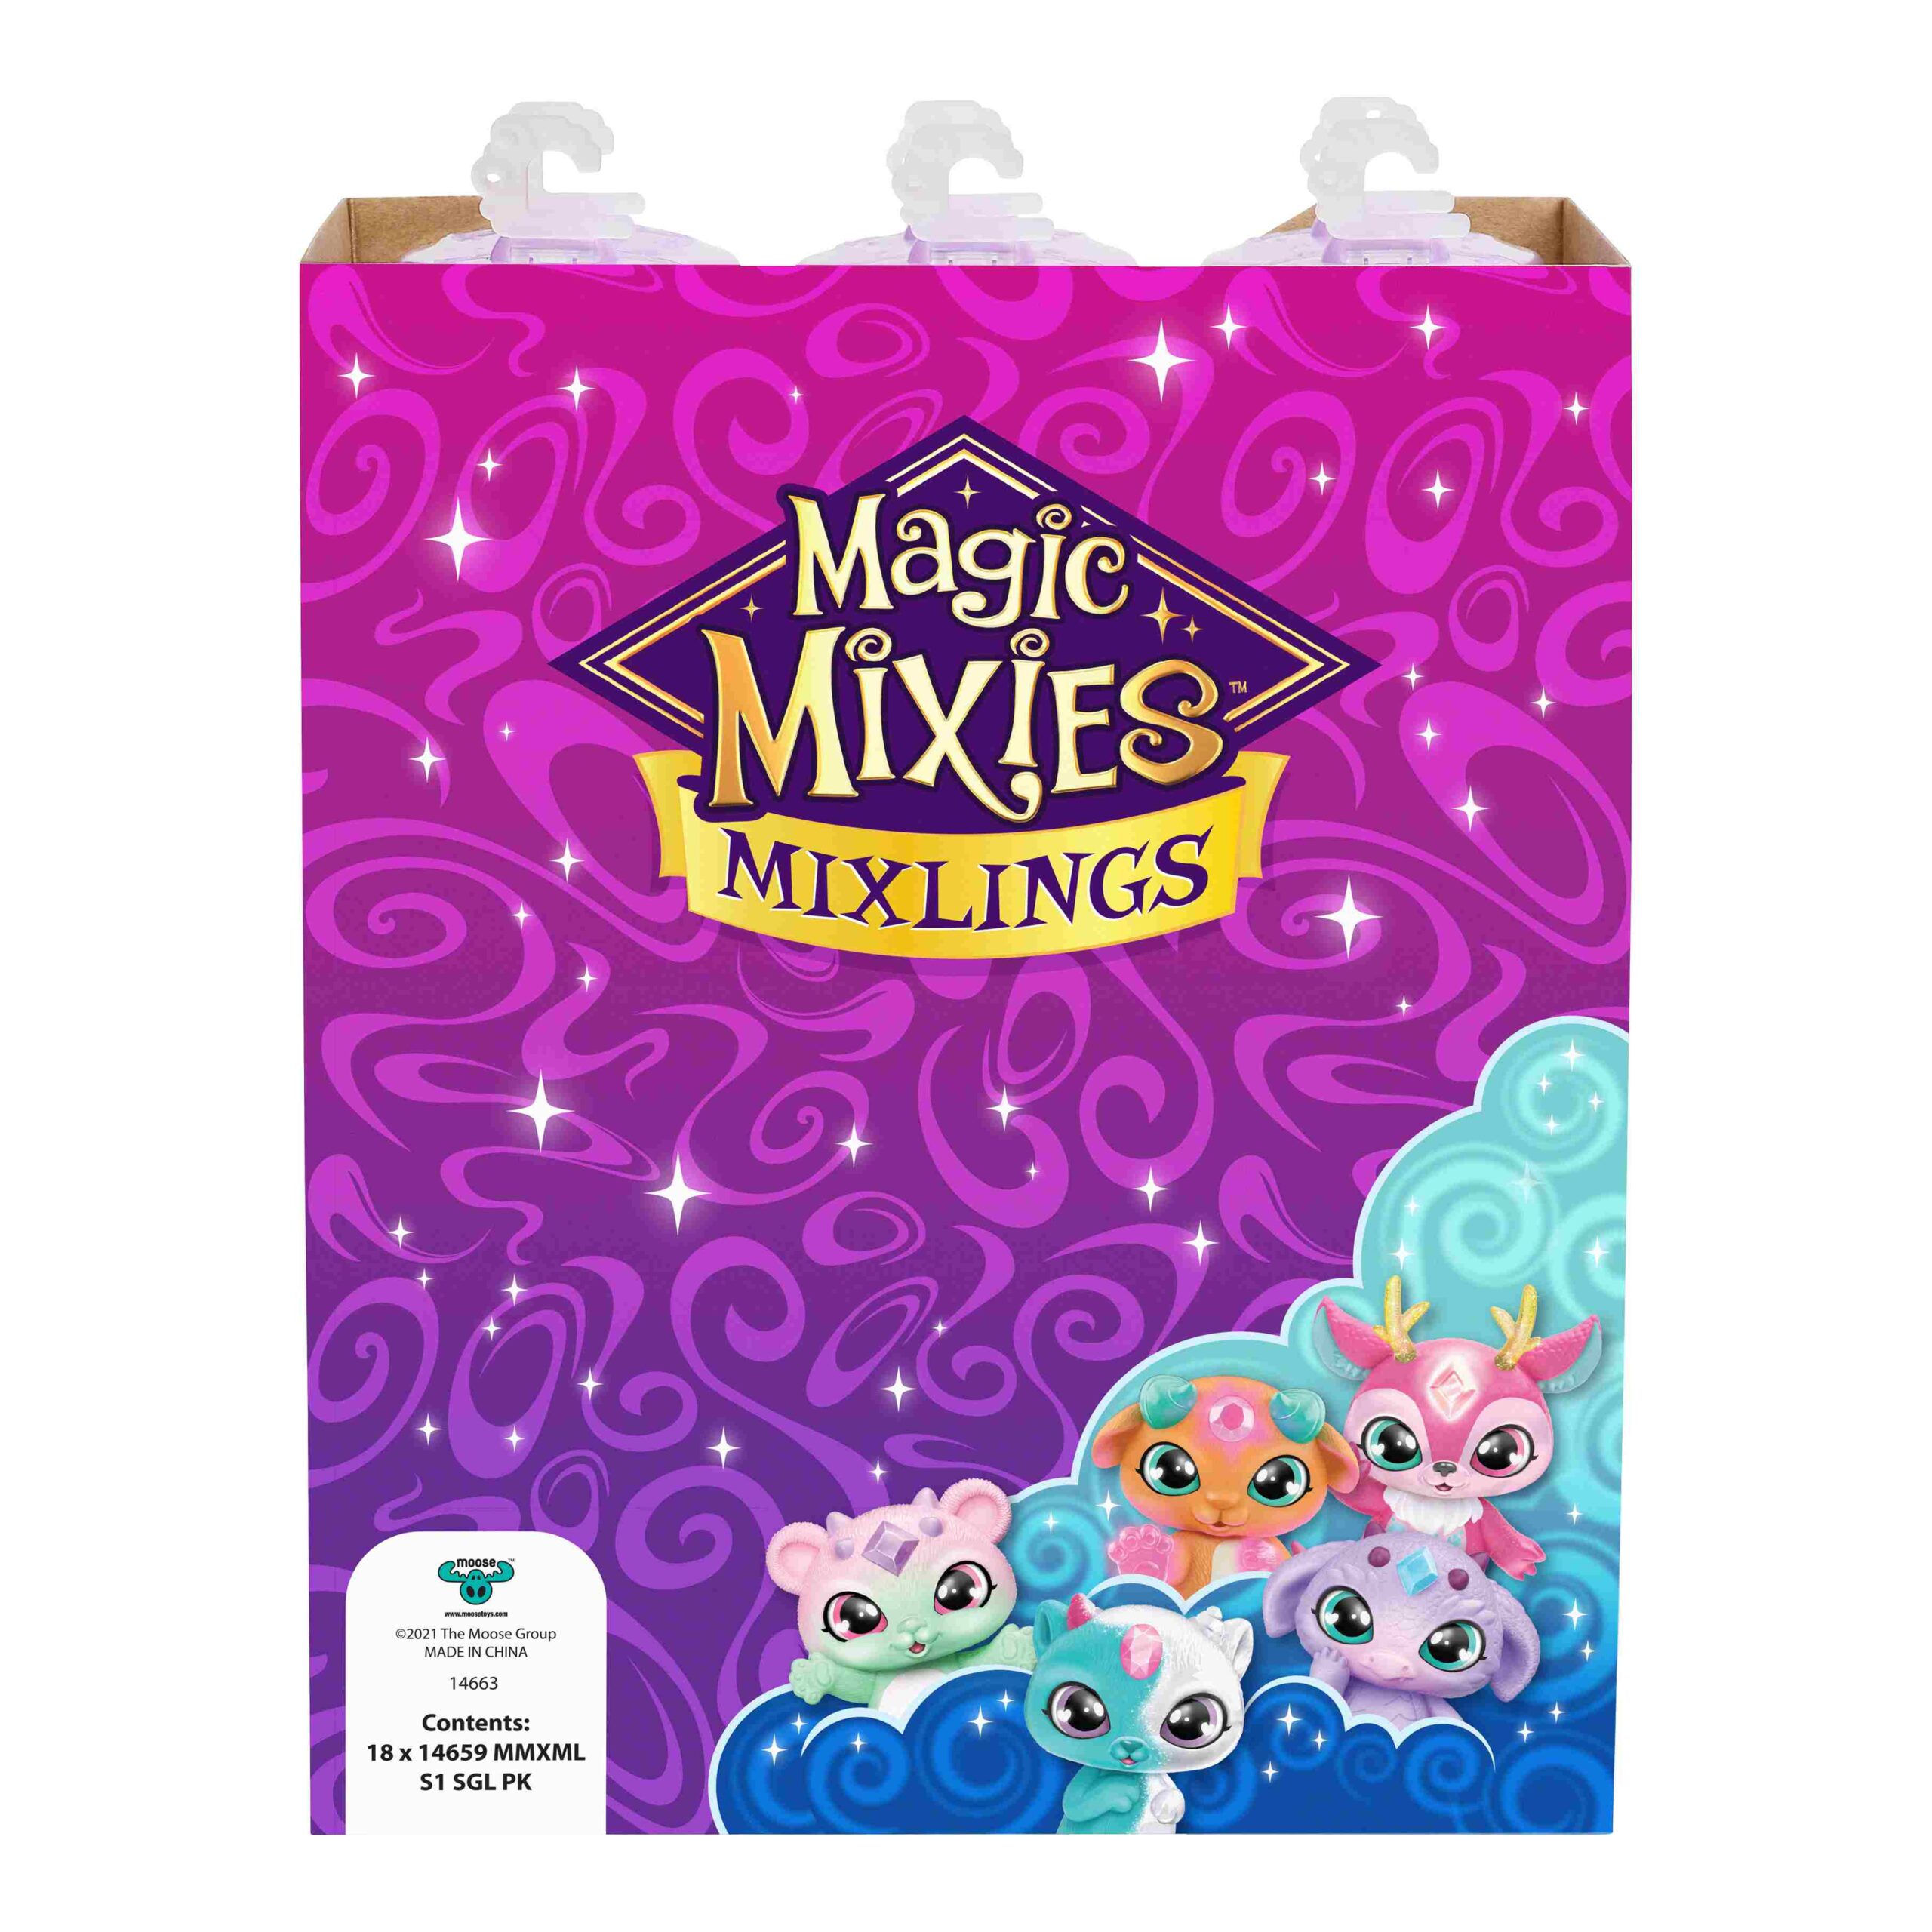 Magic Mixies Mixlings Συλλεκτική Φιγούρα Σε Καζάνι S1 MG000000 - Magic Mixies